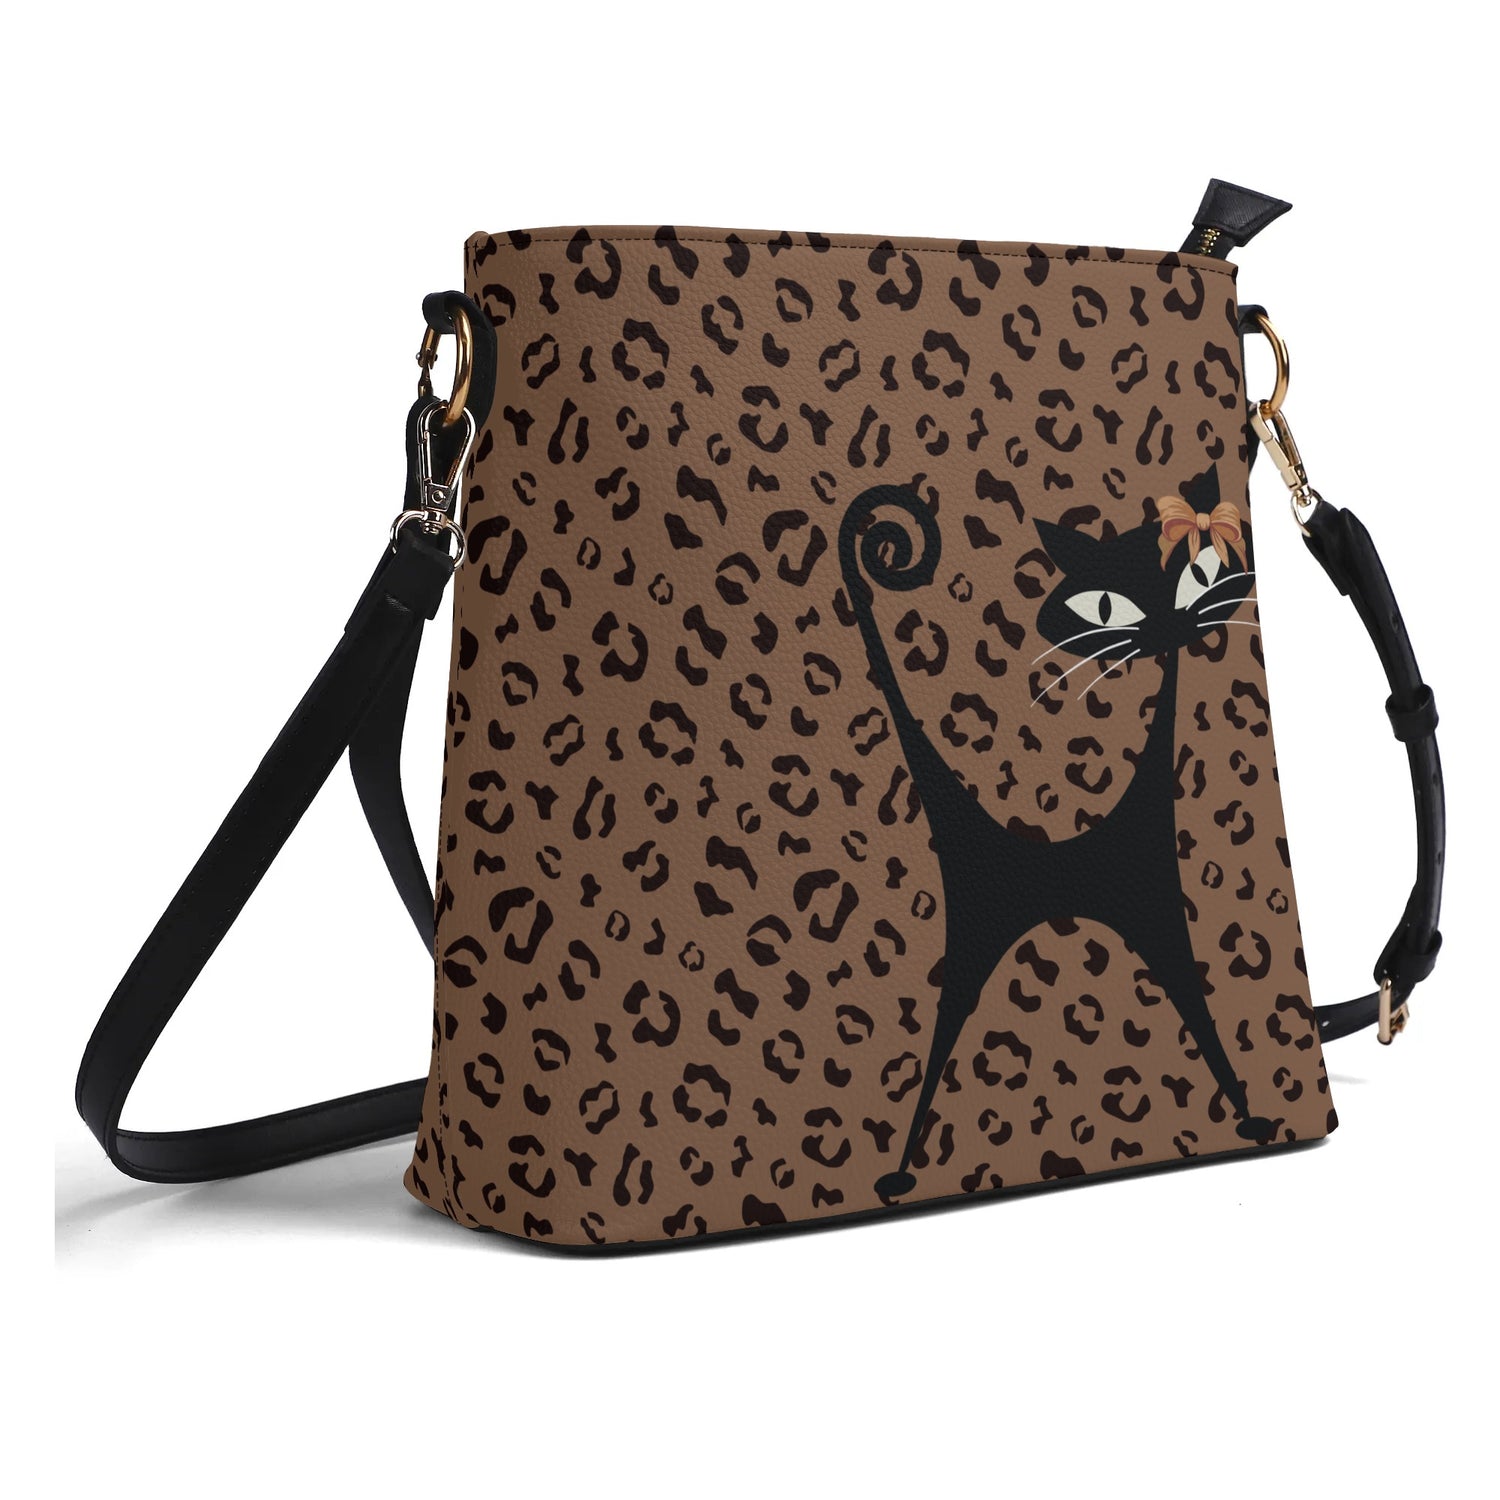 Jungle Print Atomic Cat, Kitschy Retro Mod Bucket Bag